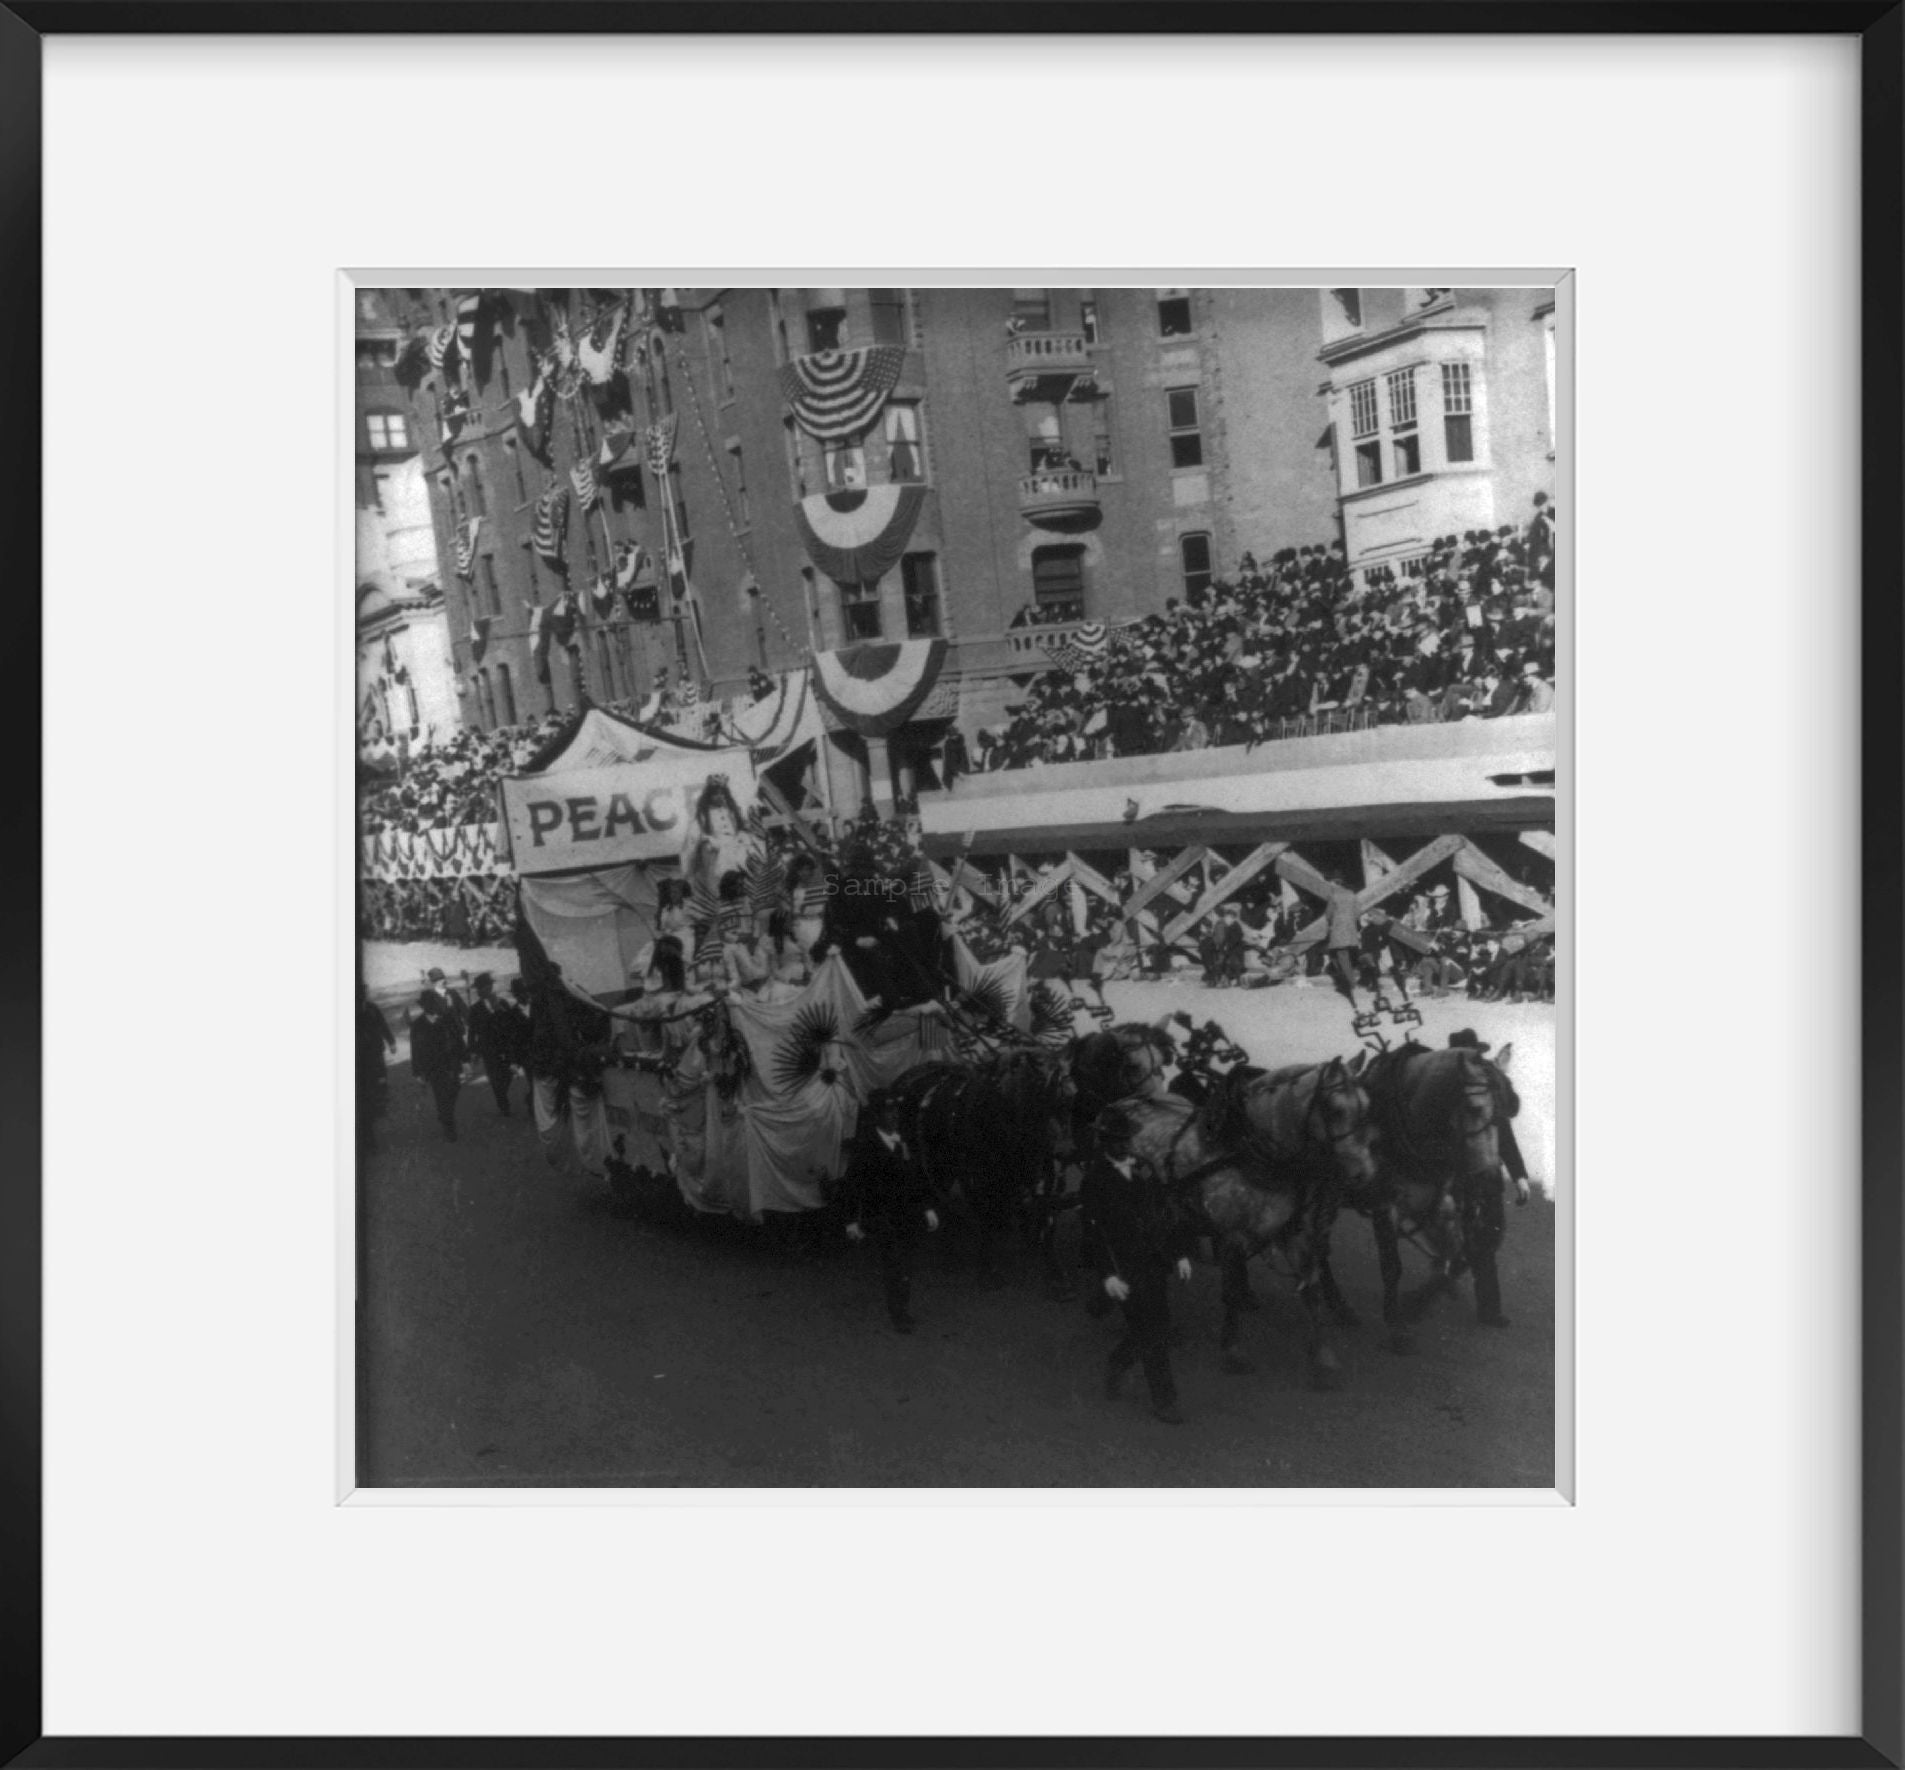 1899 Photo Leading the parade - Phila. Peace Jubilee Location: Pennsylvania, Phi